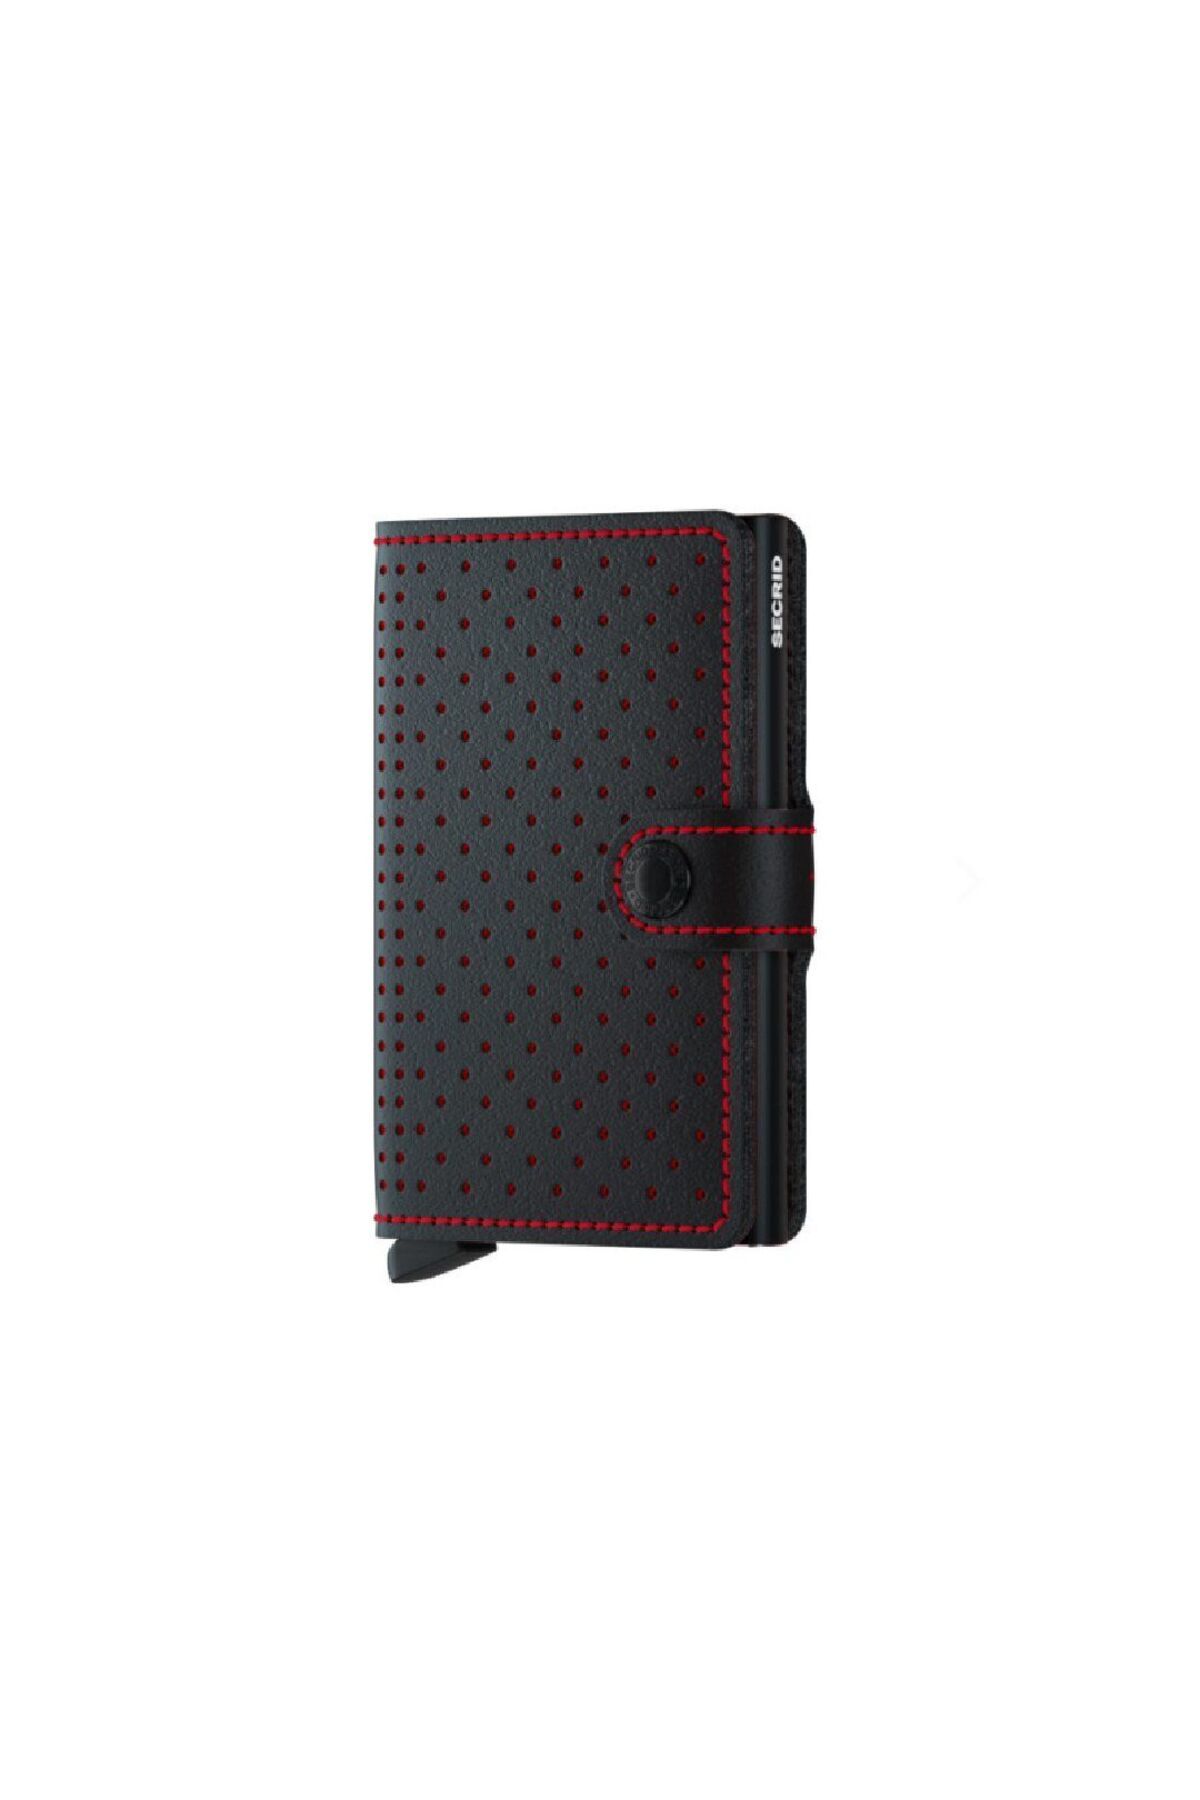 Secrid Miniwallet Perforated Black Red - Siyah/Kırmızı %100 Orjinal Avrupa Derisi Cüzdan